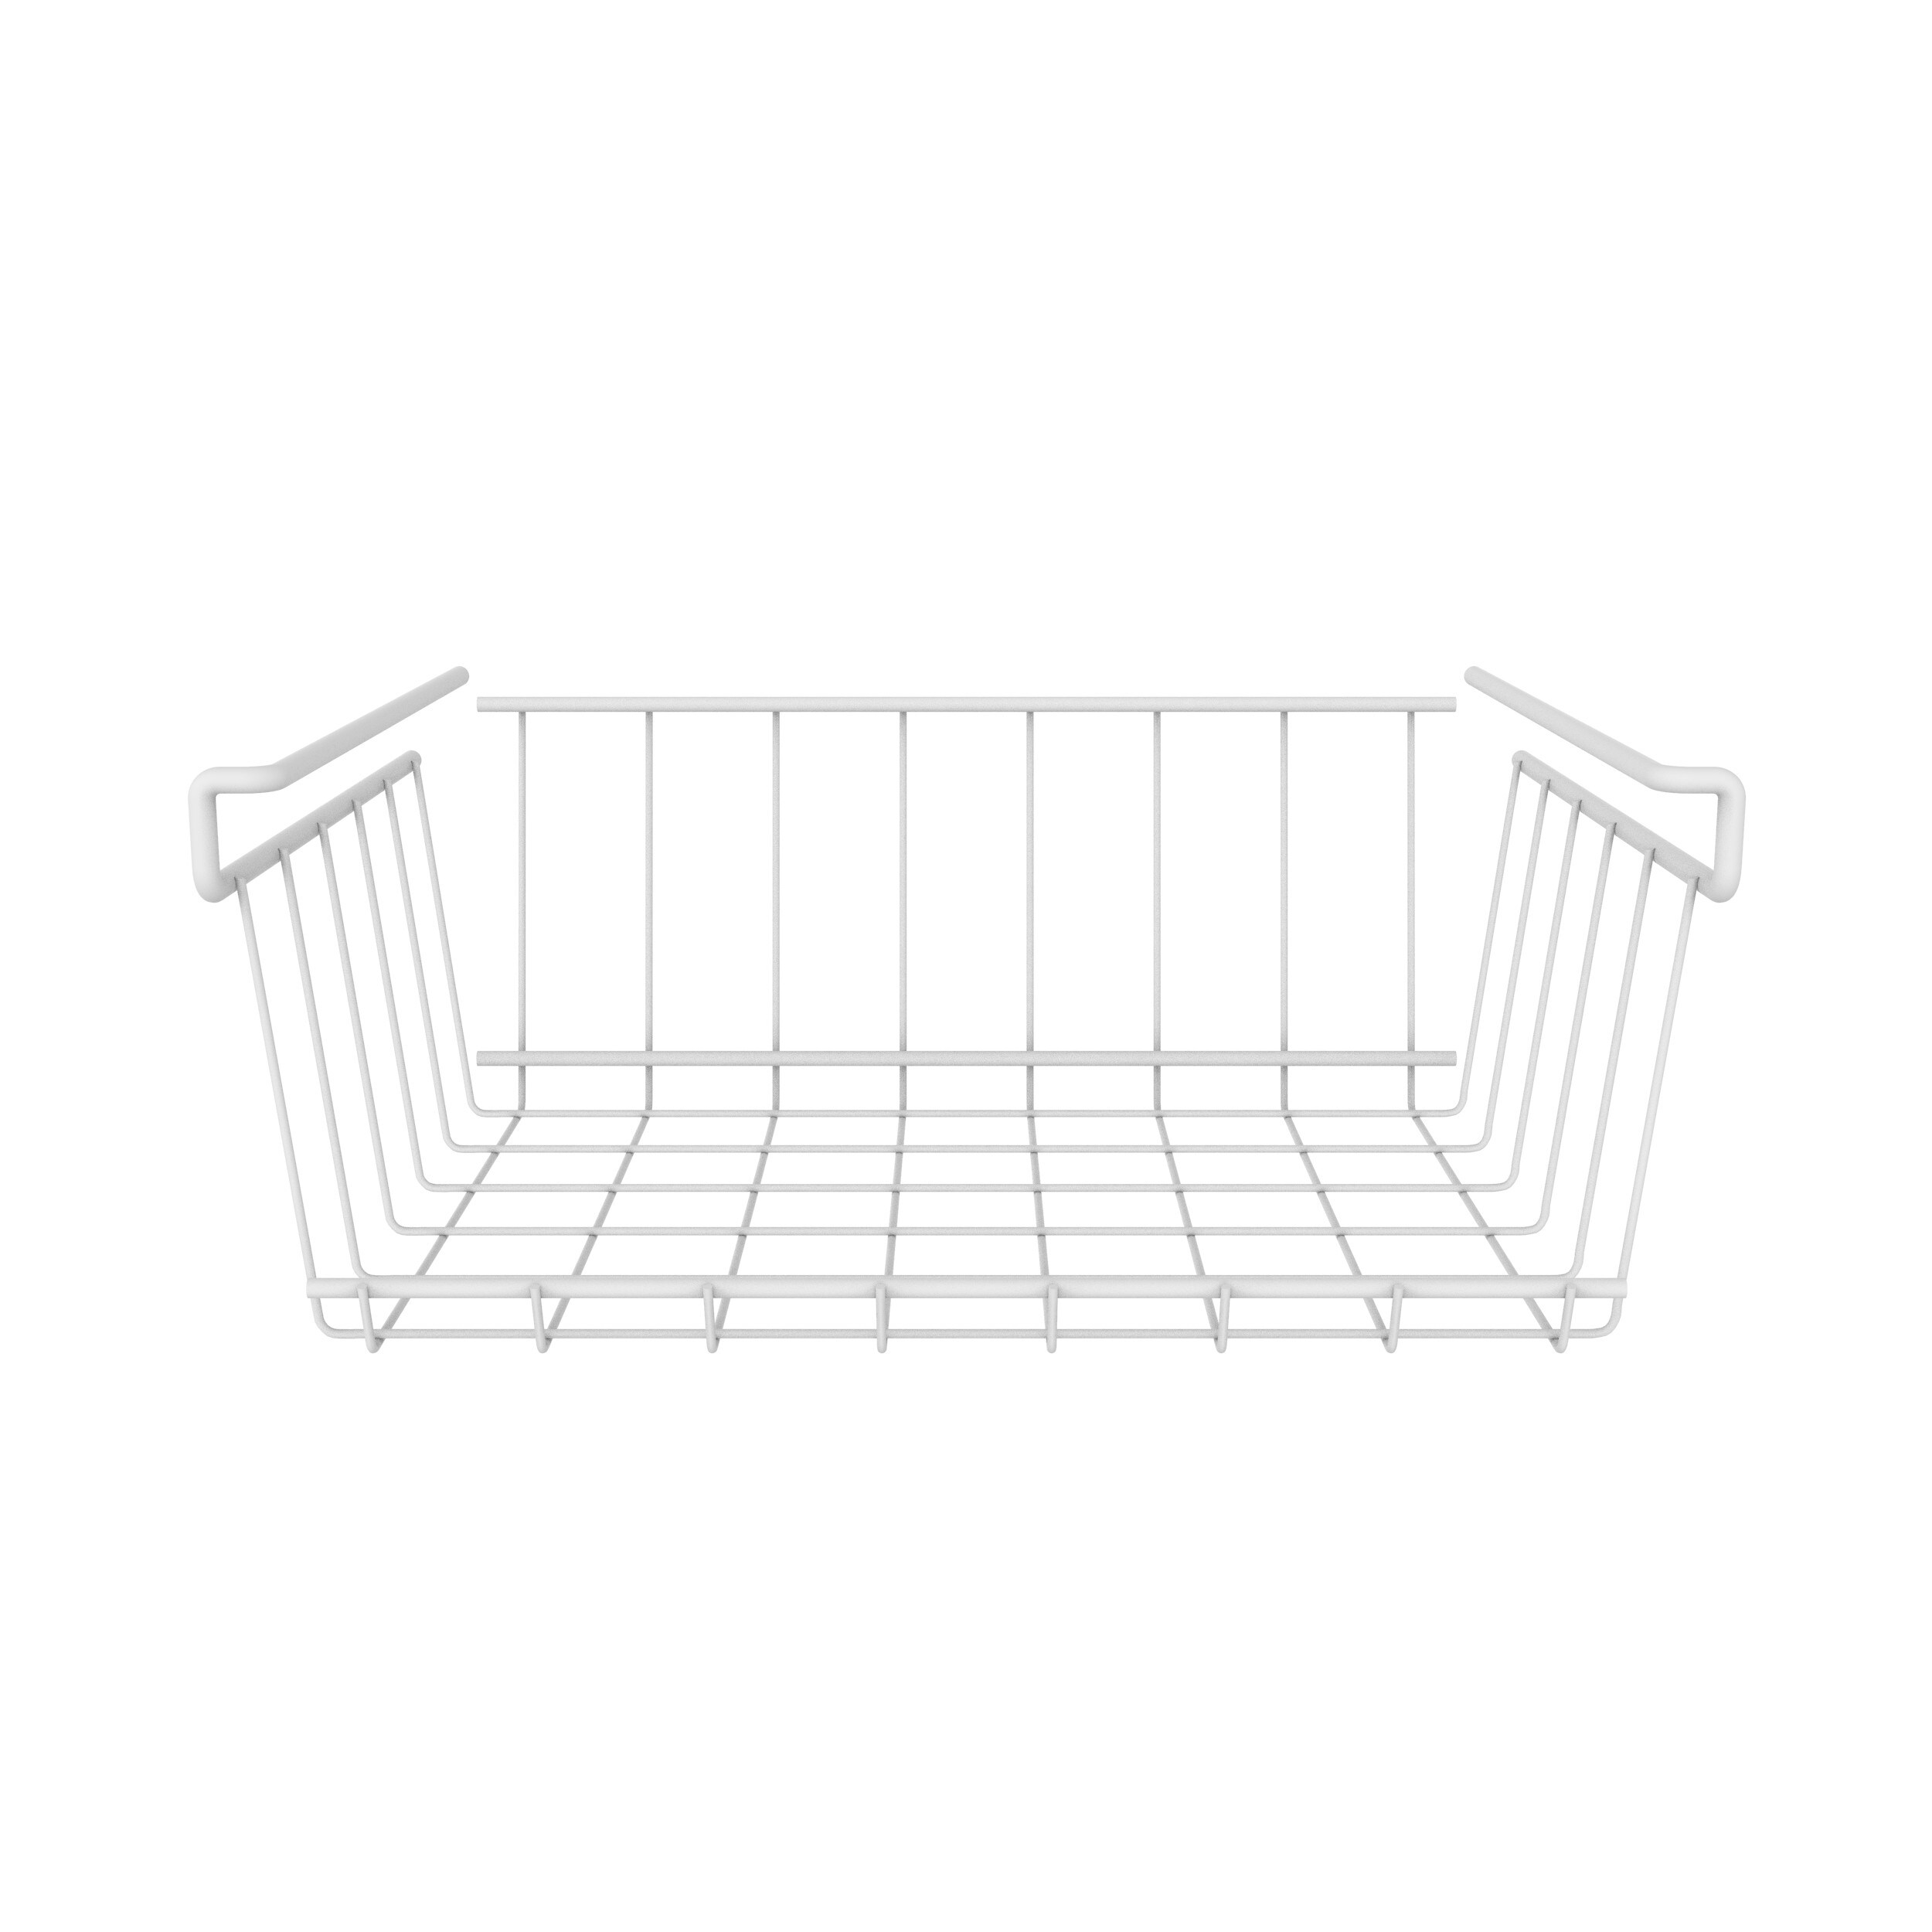 TOROTON Shelf Liners, 12 in x 20 FT Non-Slip Cabinet Liner for